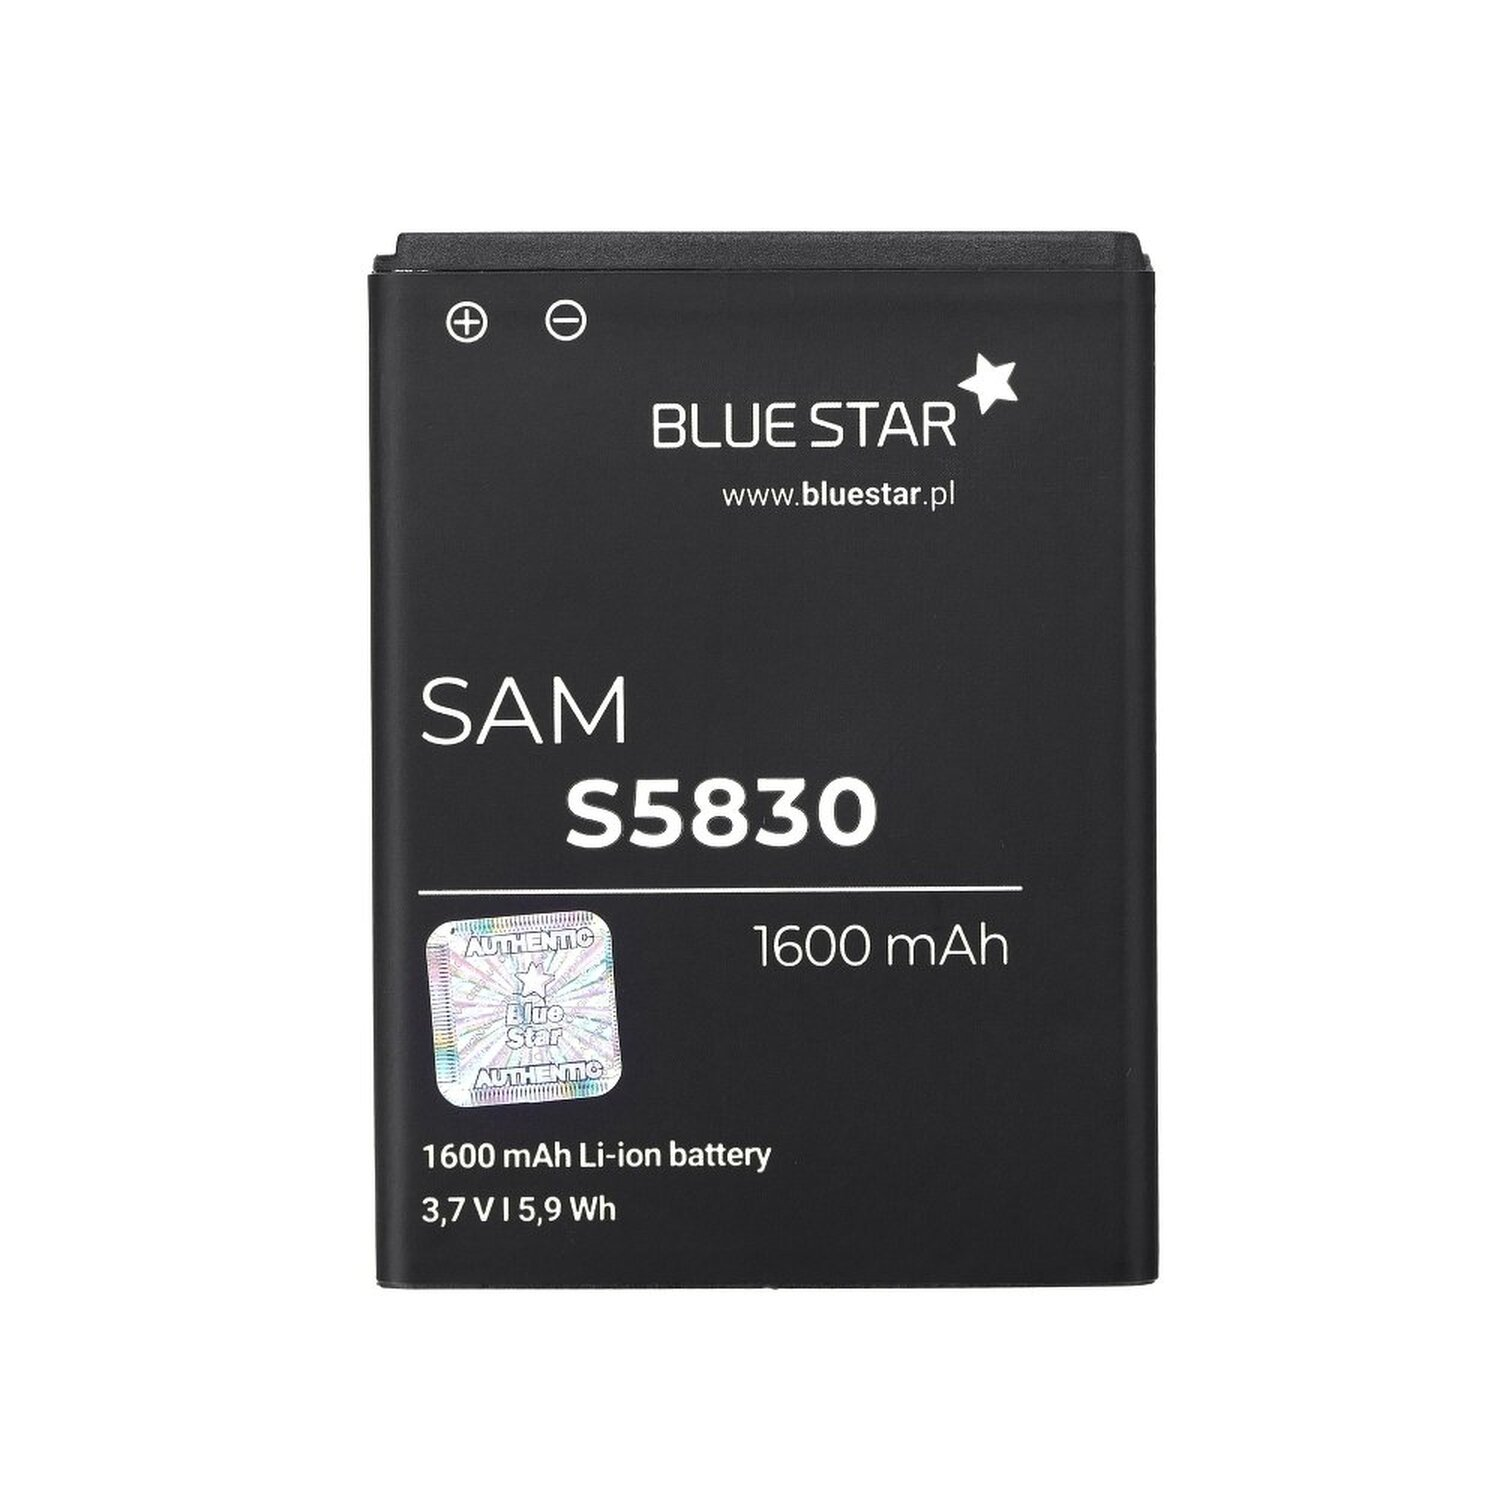 Galaxy (S5670) Samsung Gio BLUESTAR Handyakku Li-Ion Ace/ Akku für Galaxy